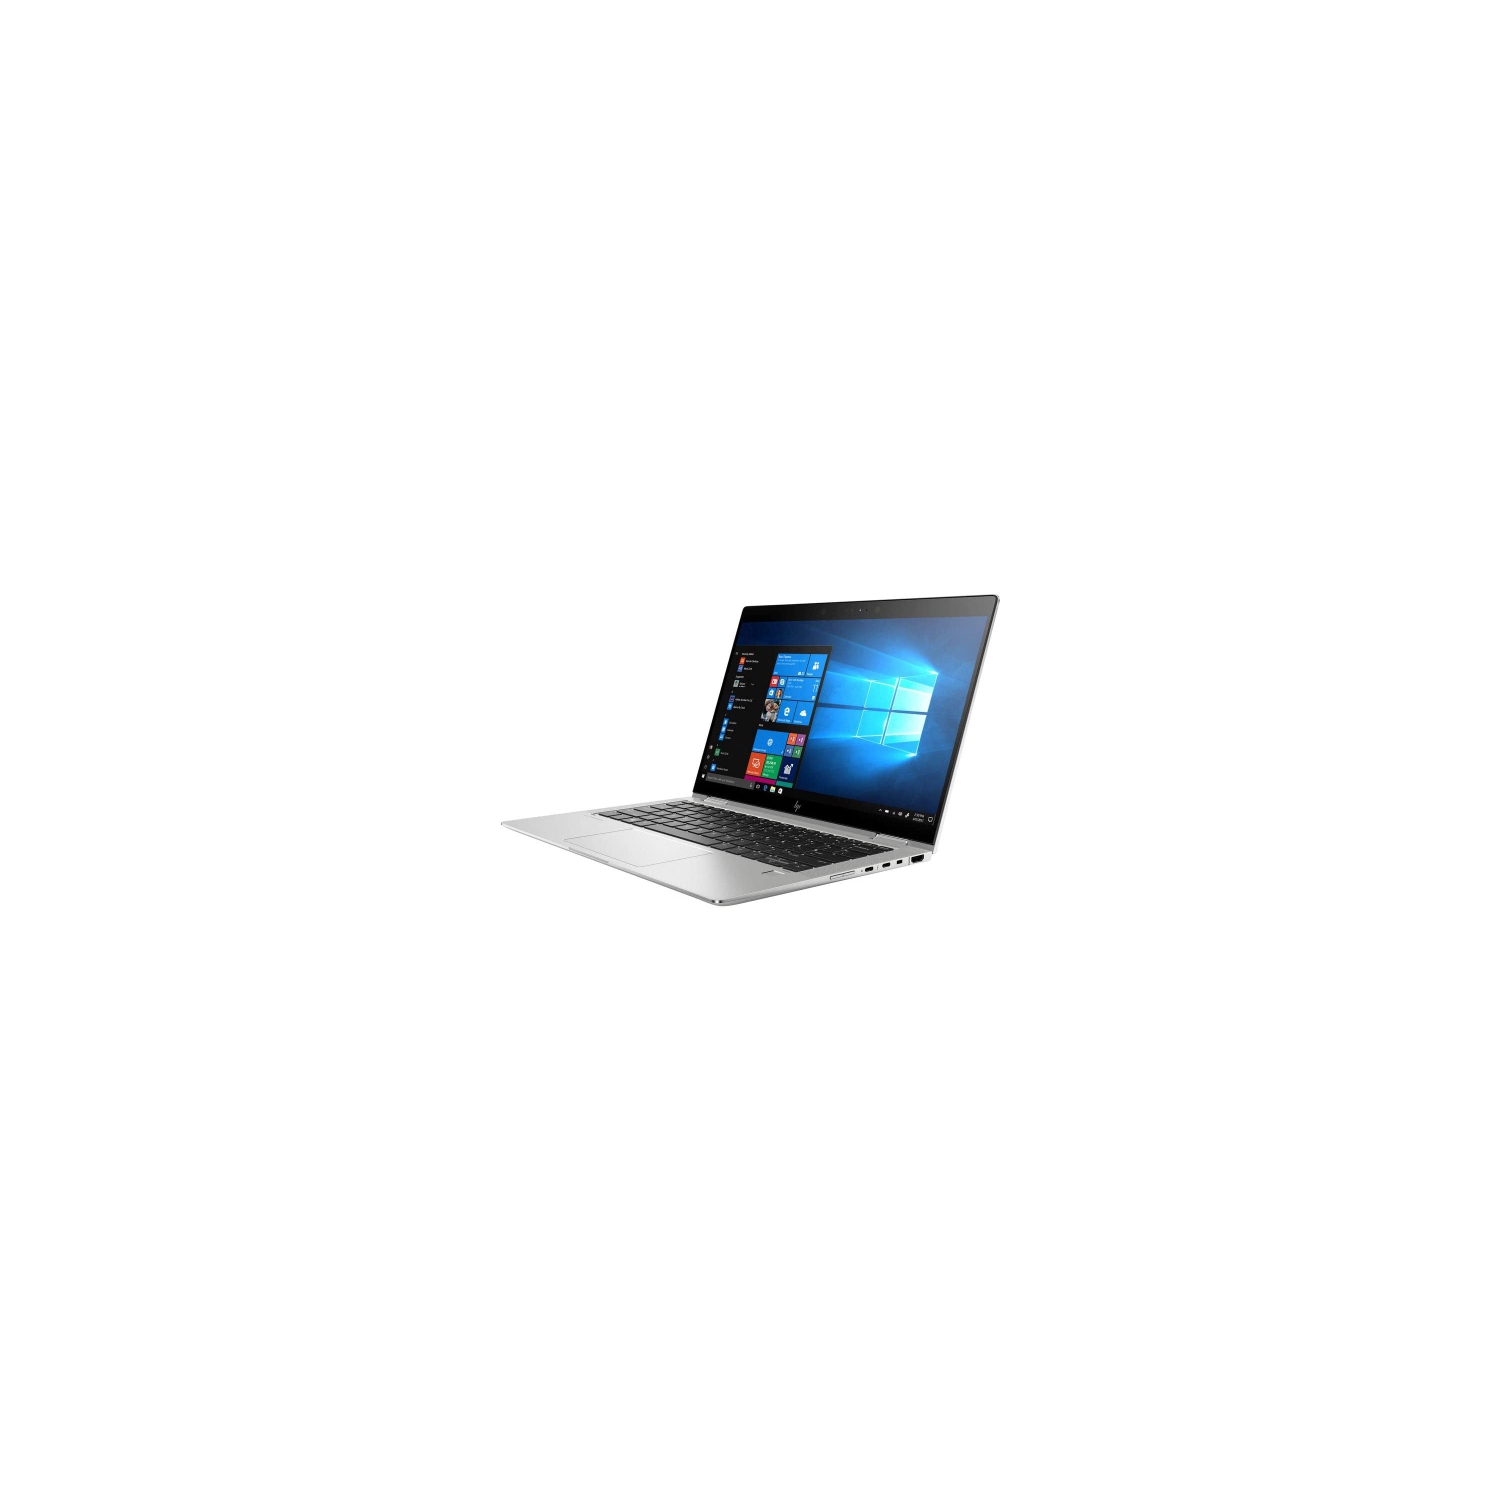 Refurbished (Excellent) - HP EliteBook x360 1030 G4 Laptop - Core i7-8665U CPU @ 1.90GHz - 16GB RAM - 256GB SSD(Grade A - Excellent condition)